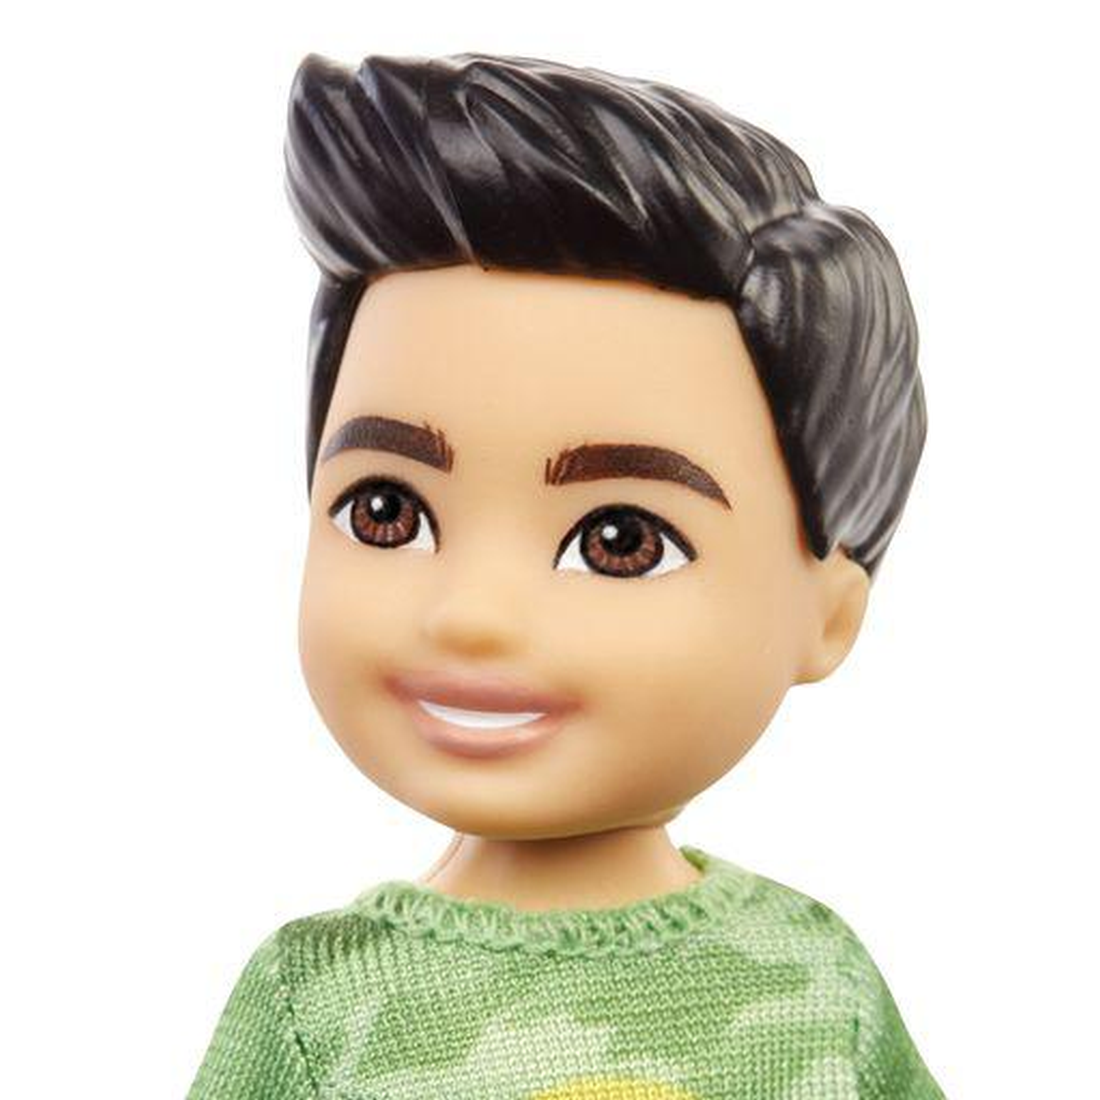 Barbie - Chelsea - Καστανό Αγοράκι Με Πράσινη Μπλούζα